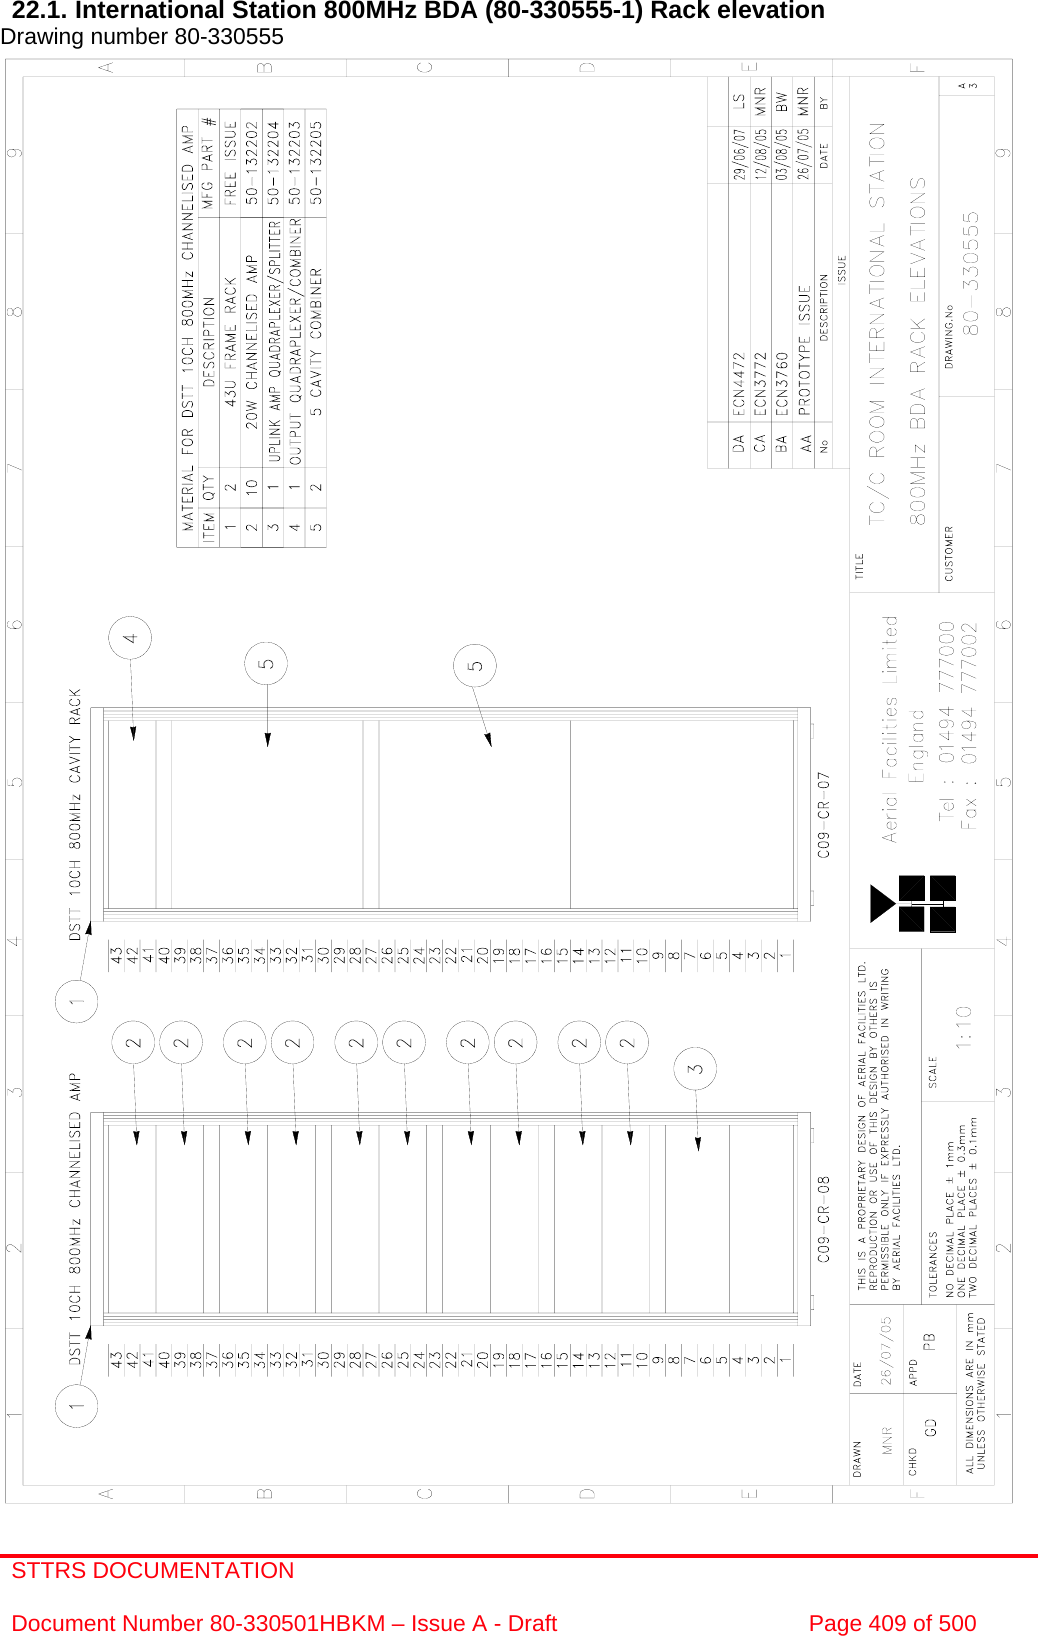 STTRS DOCUMENTATION  Document Number 80-330501HBKM – Issue A - Draft  Page 409 of 500   22.1. International Station 800MHz BDA (80-330555-1) Rack elevation  Drawing number 80-330555                                                       